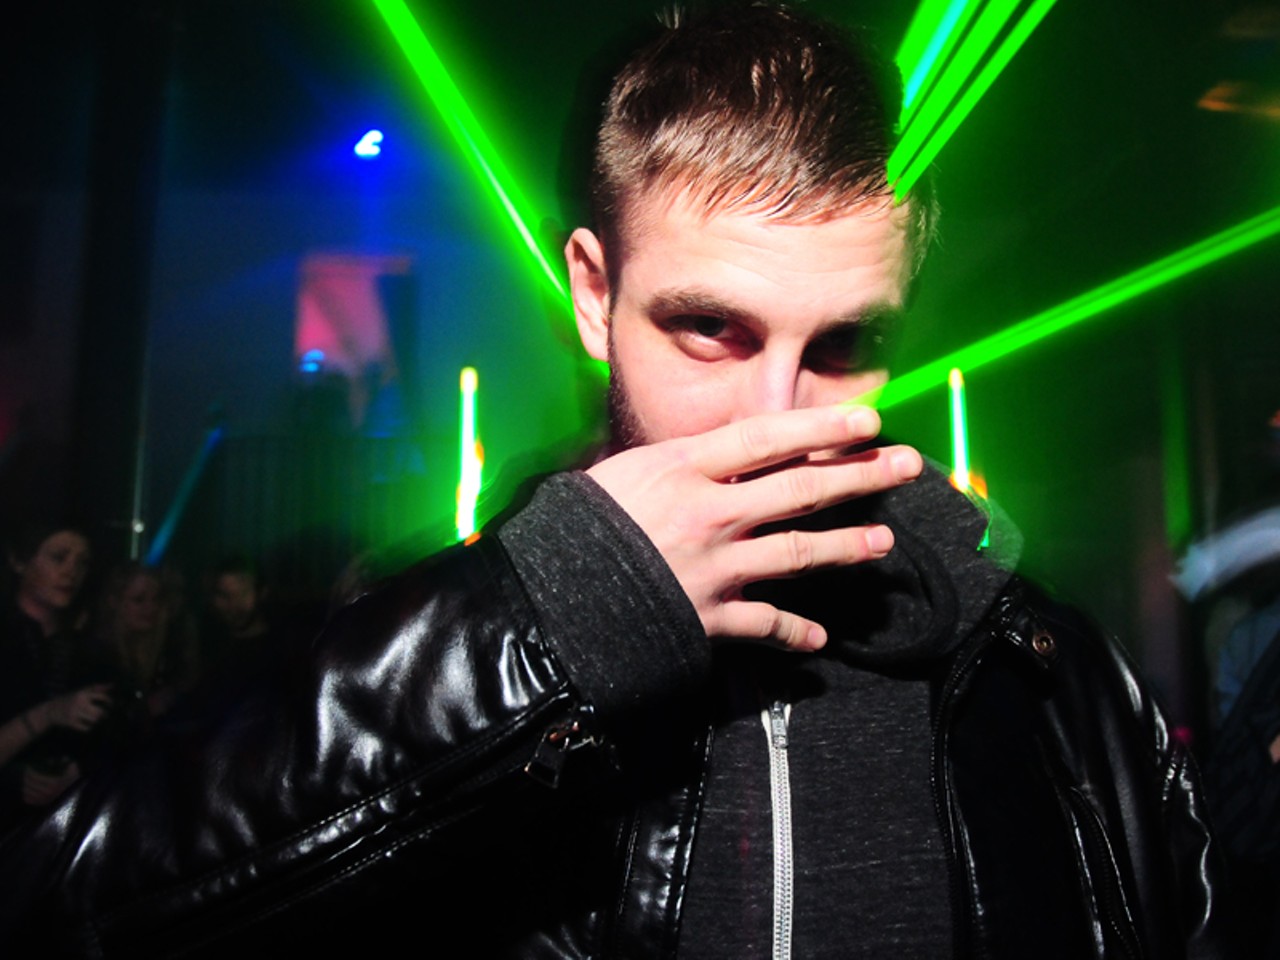 Alex Zalenka, a Chicago DJ, experienced Sol before performing Saturday night at Rue 13.